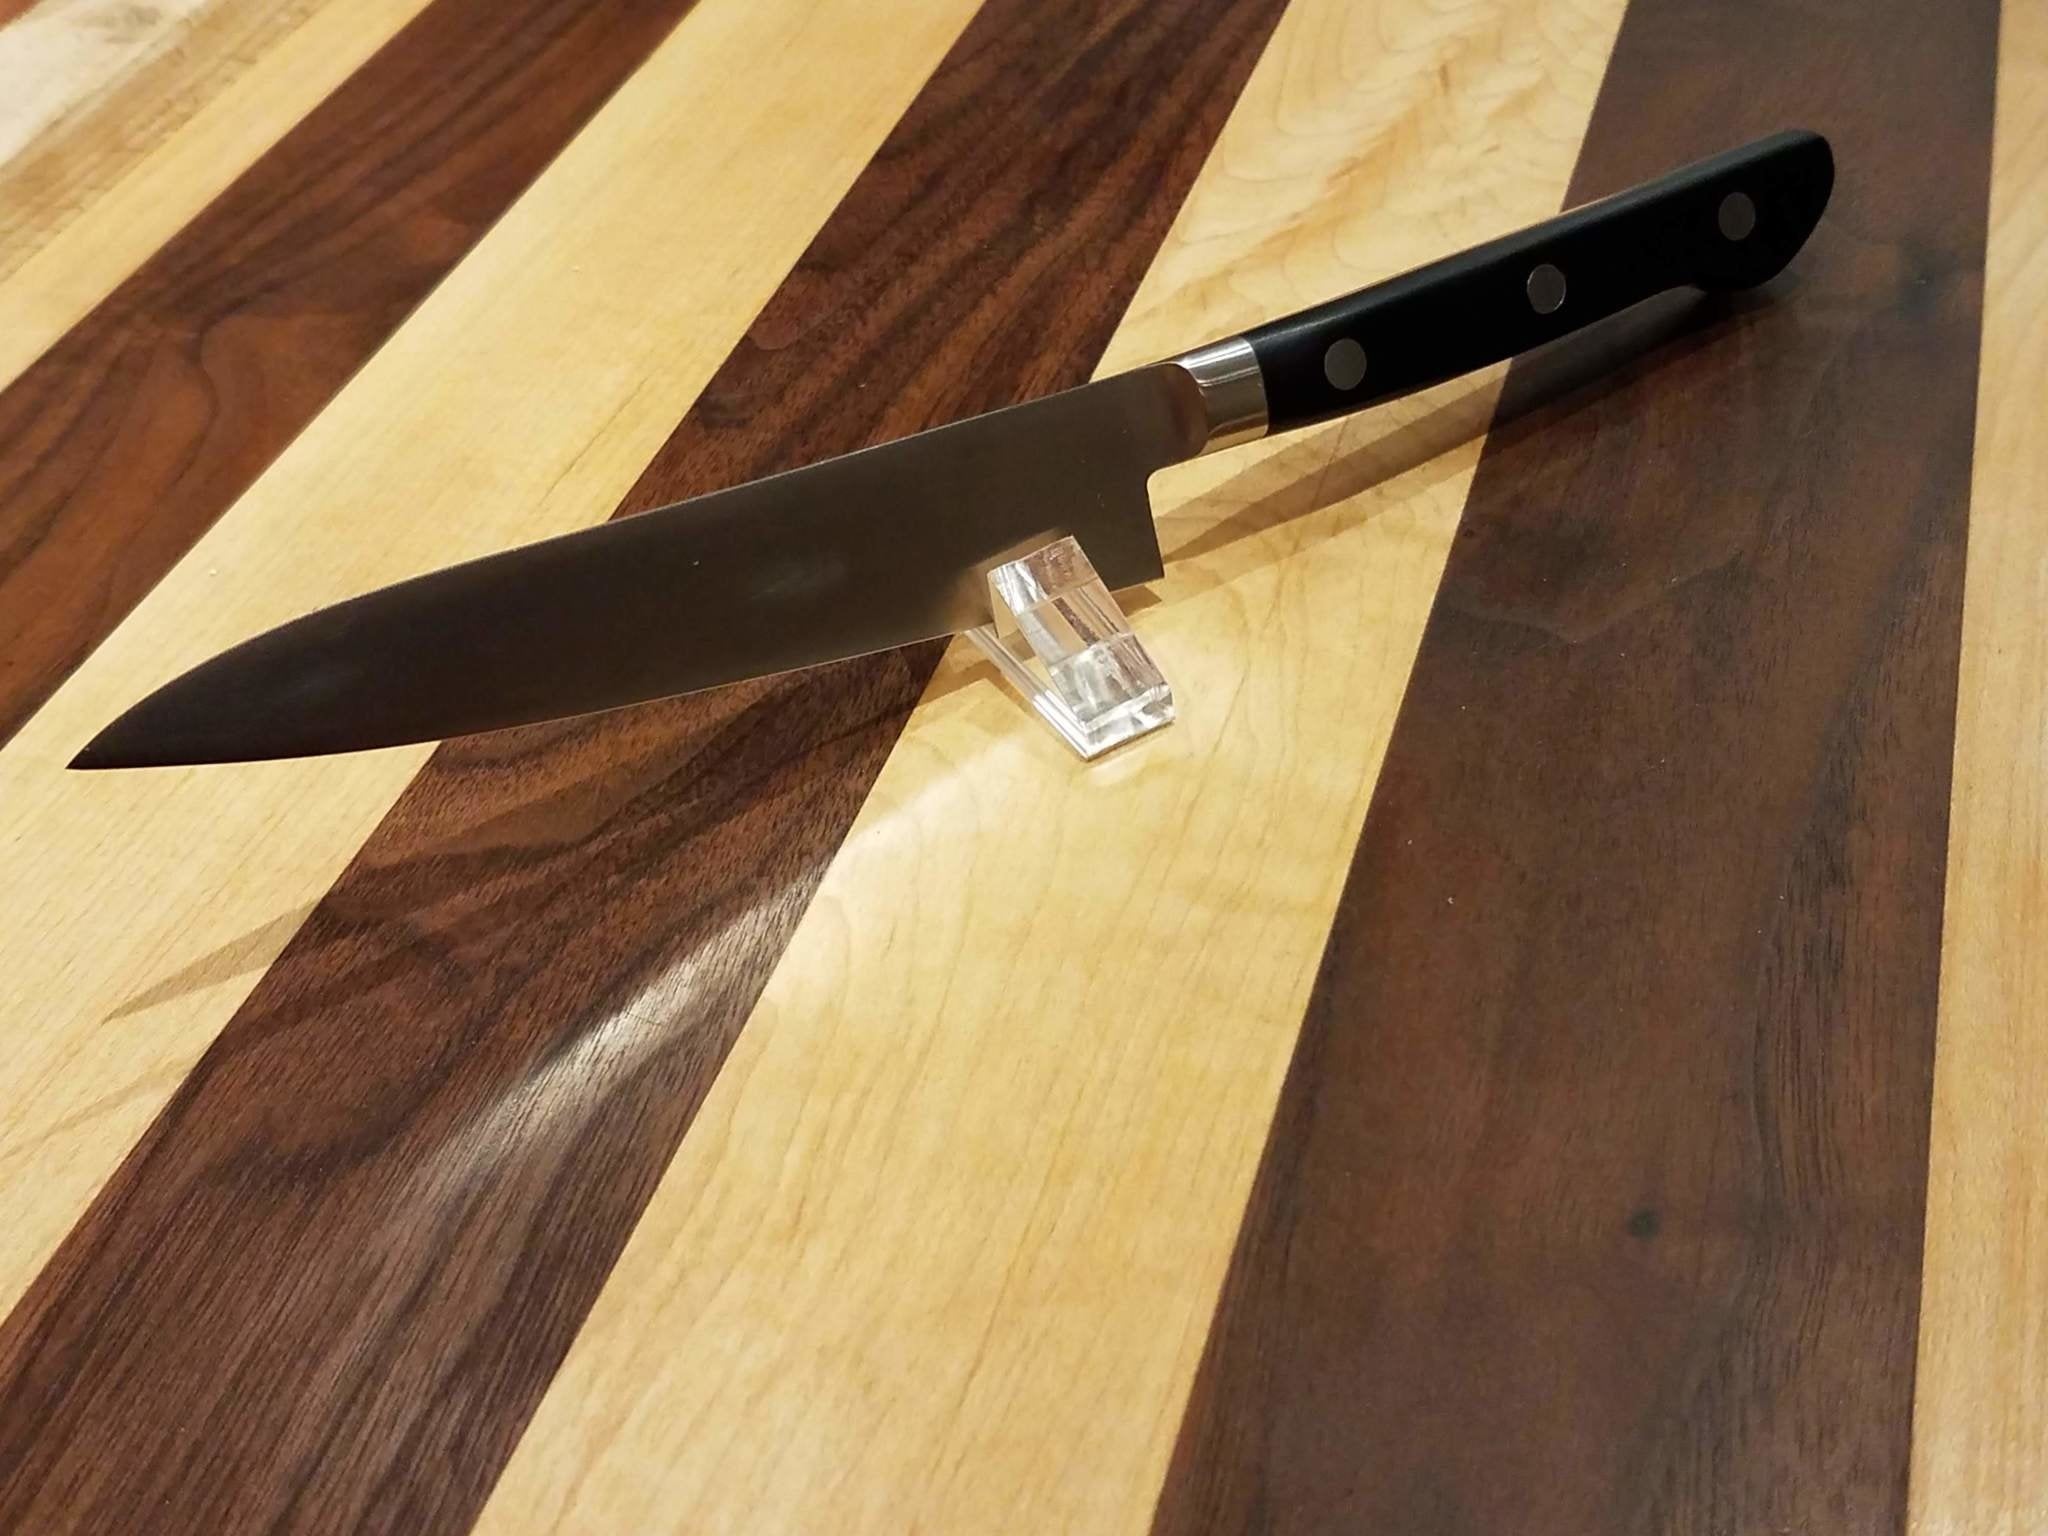 Tojiro F-519 Paring/ Kitchen Utility knife